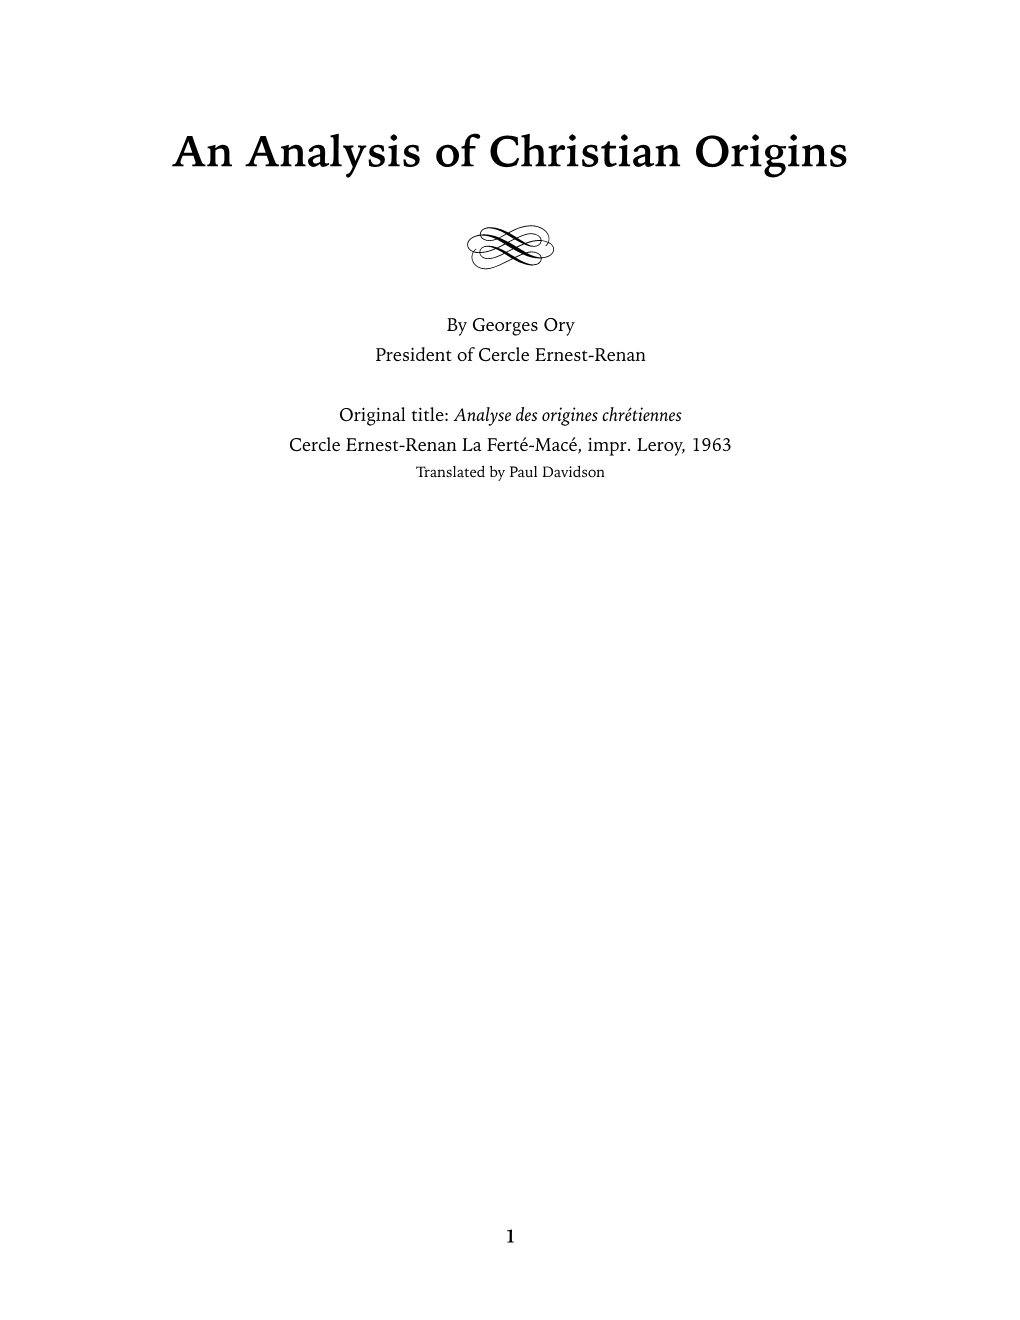 Analysis of Christian Origins 5